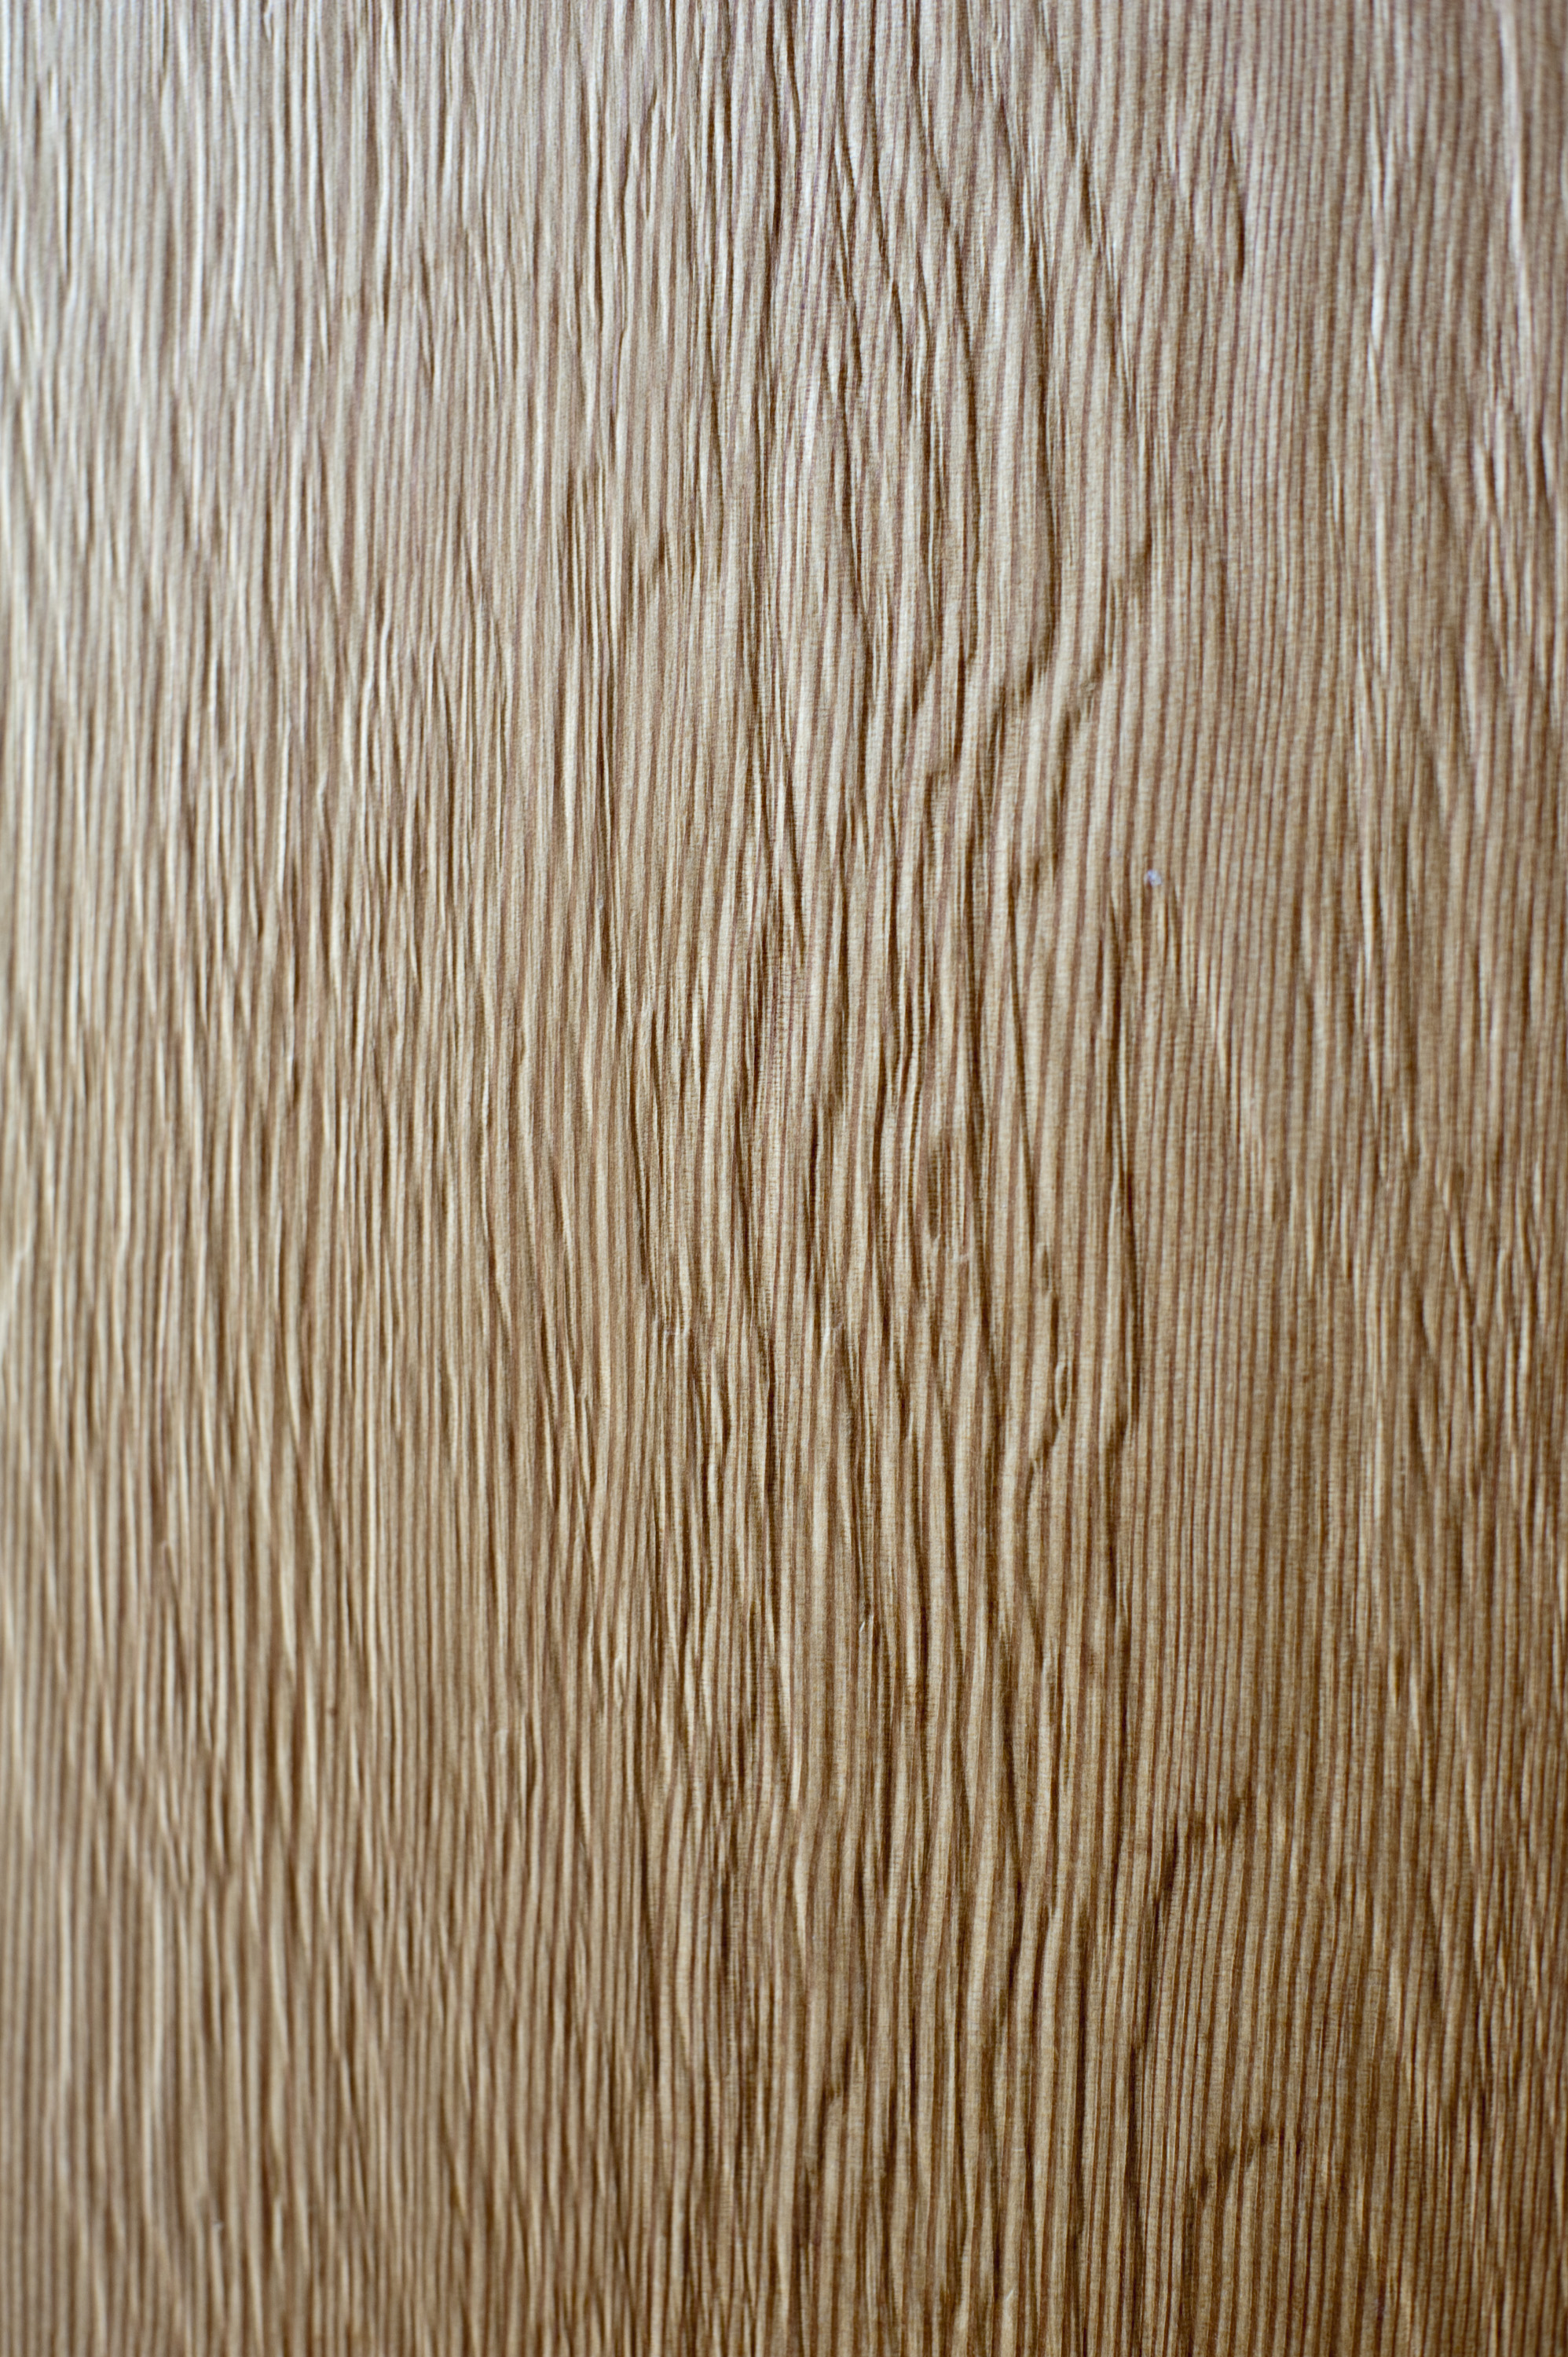 Free image of modern wood grain